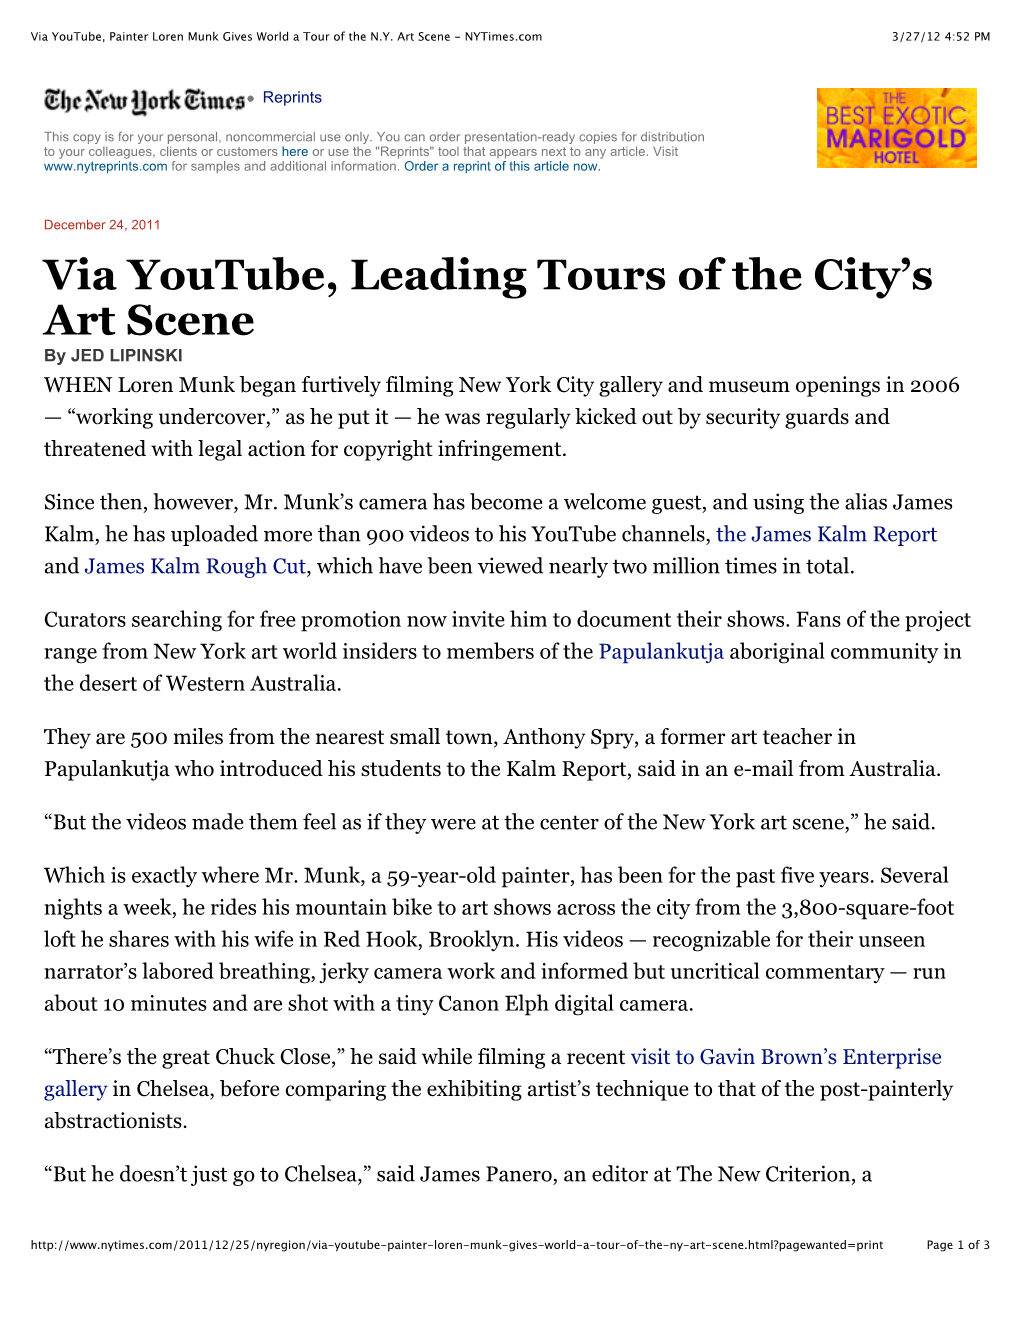 Via Youtube, Leading Tours of the City's Art Scene